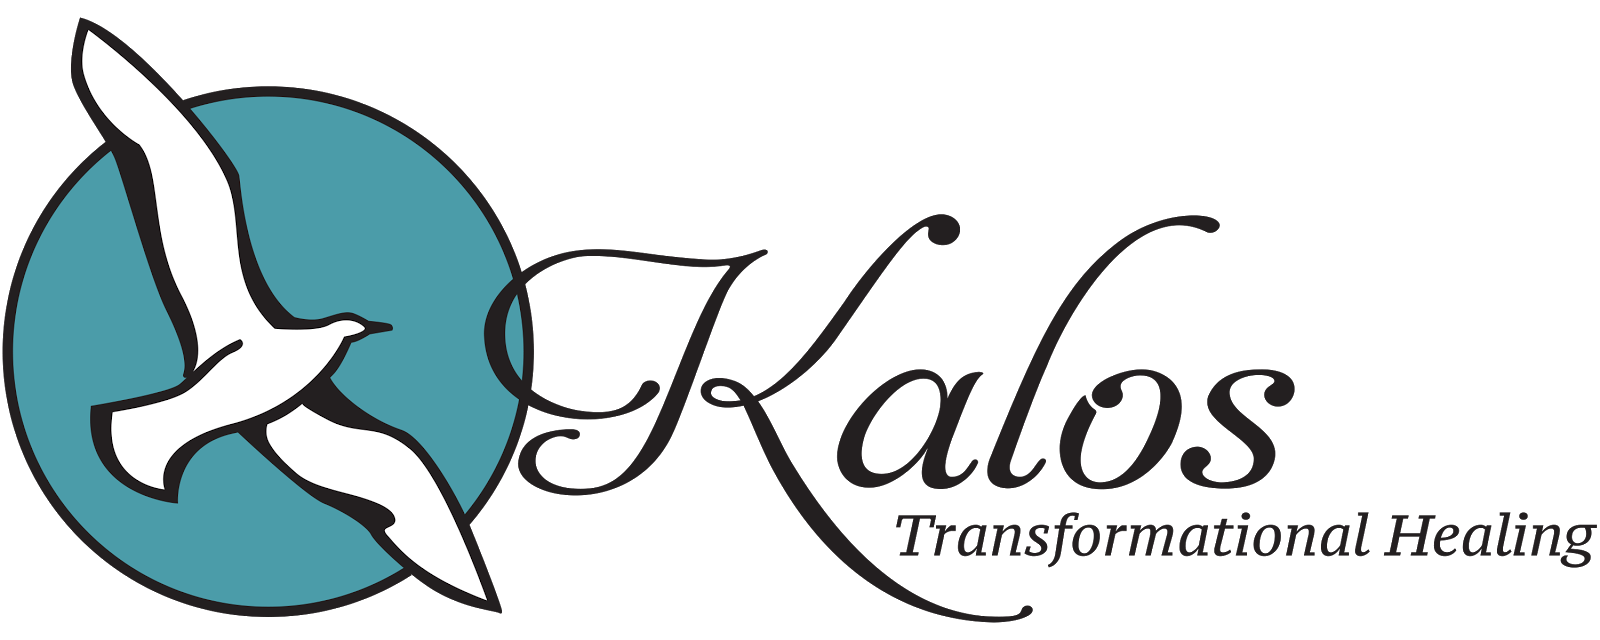 Visit the Kalos website!